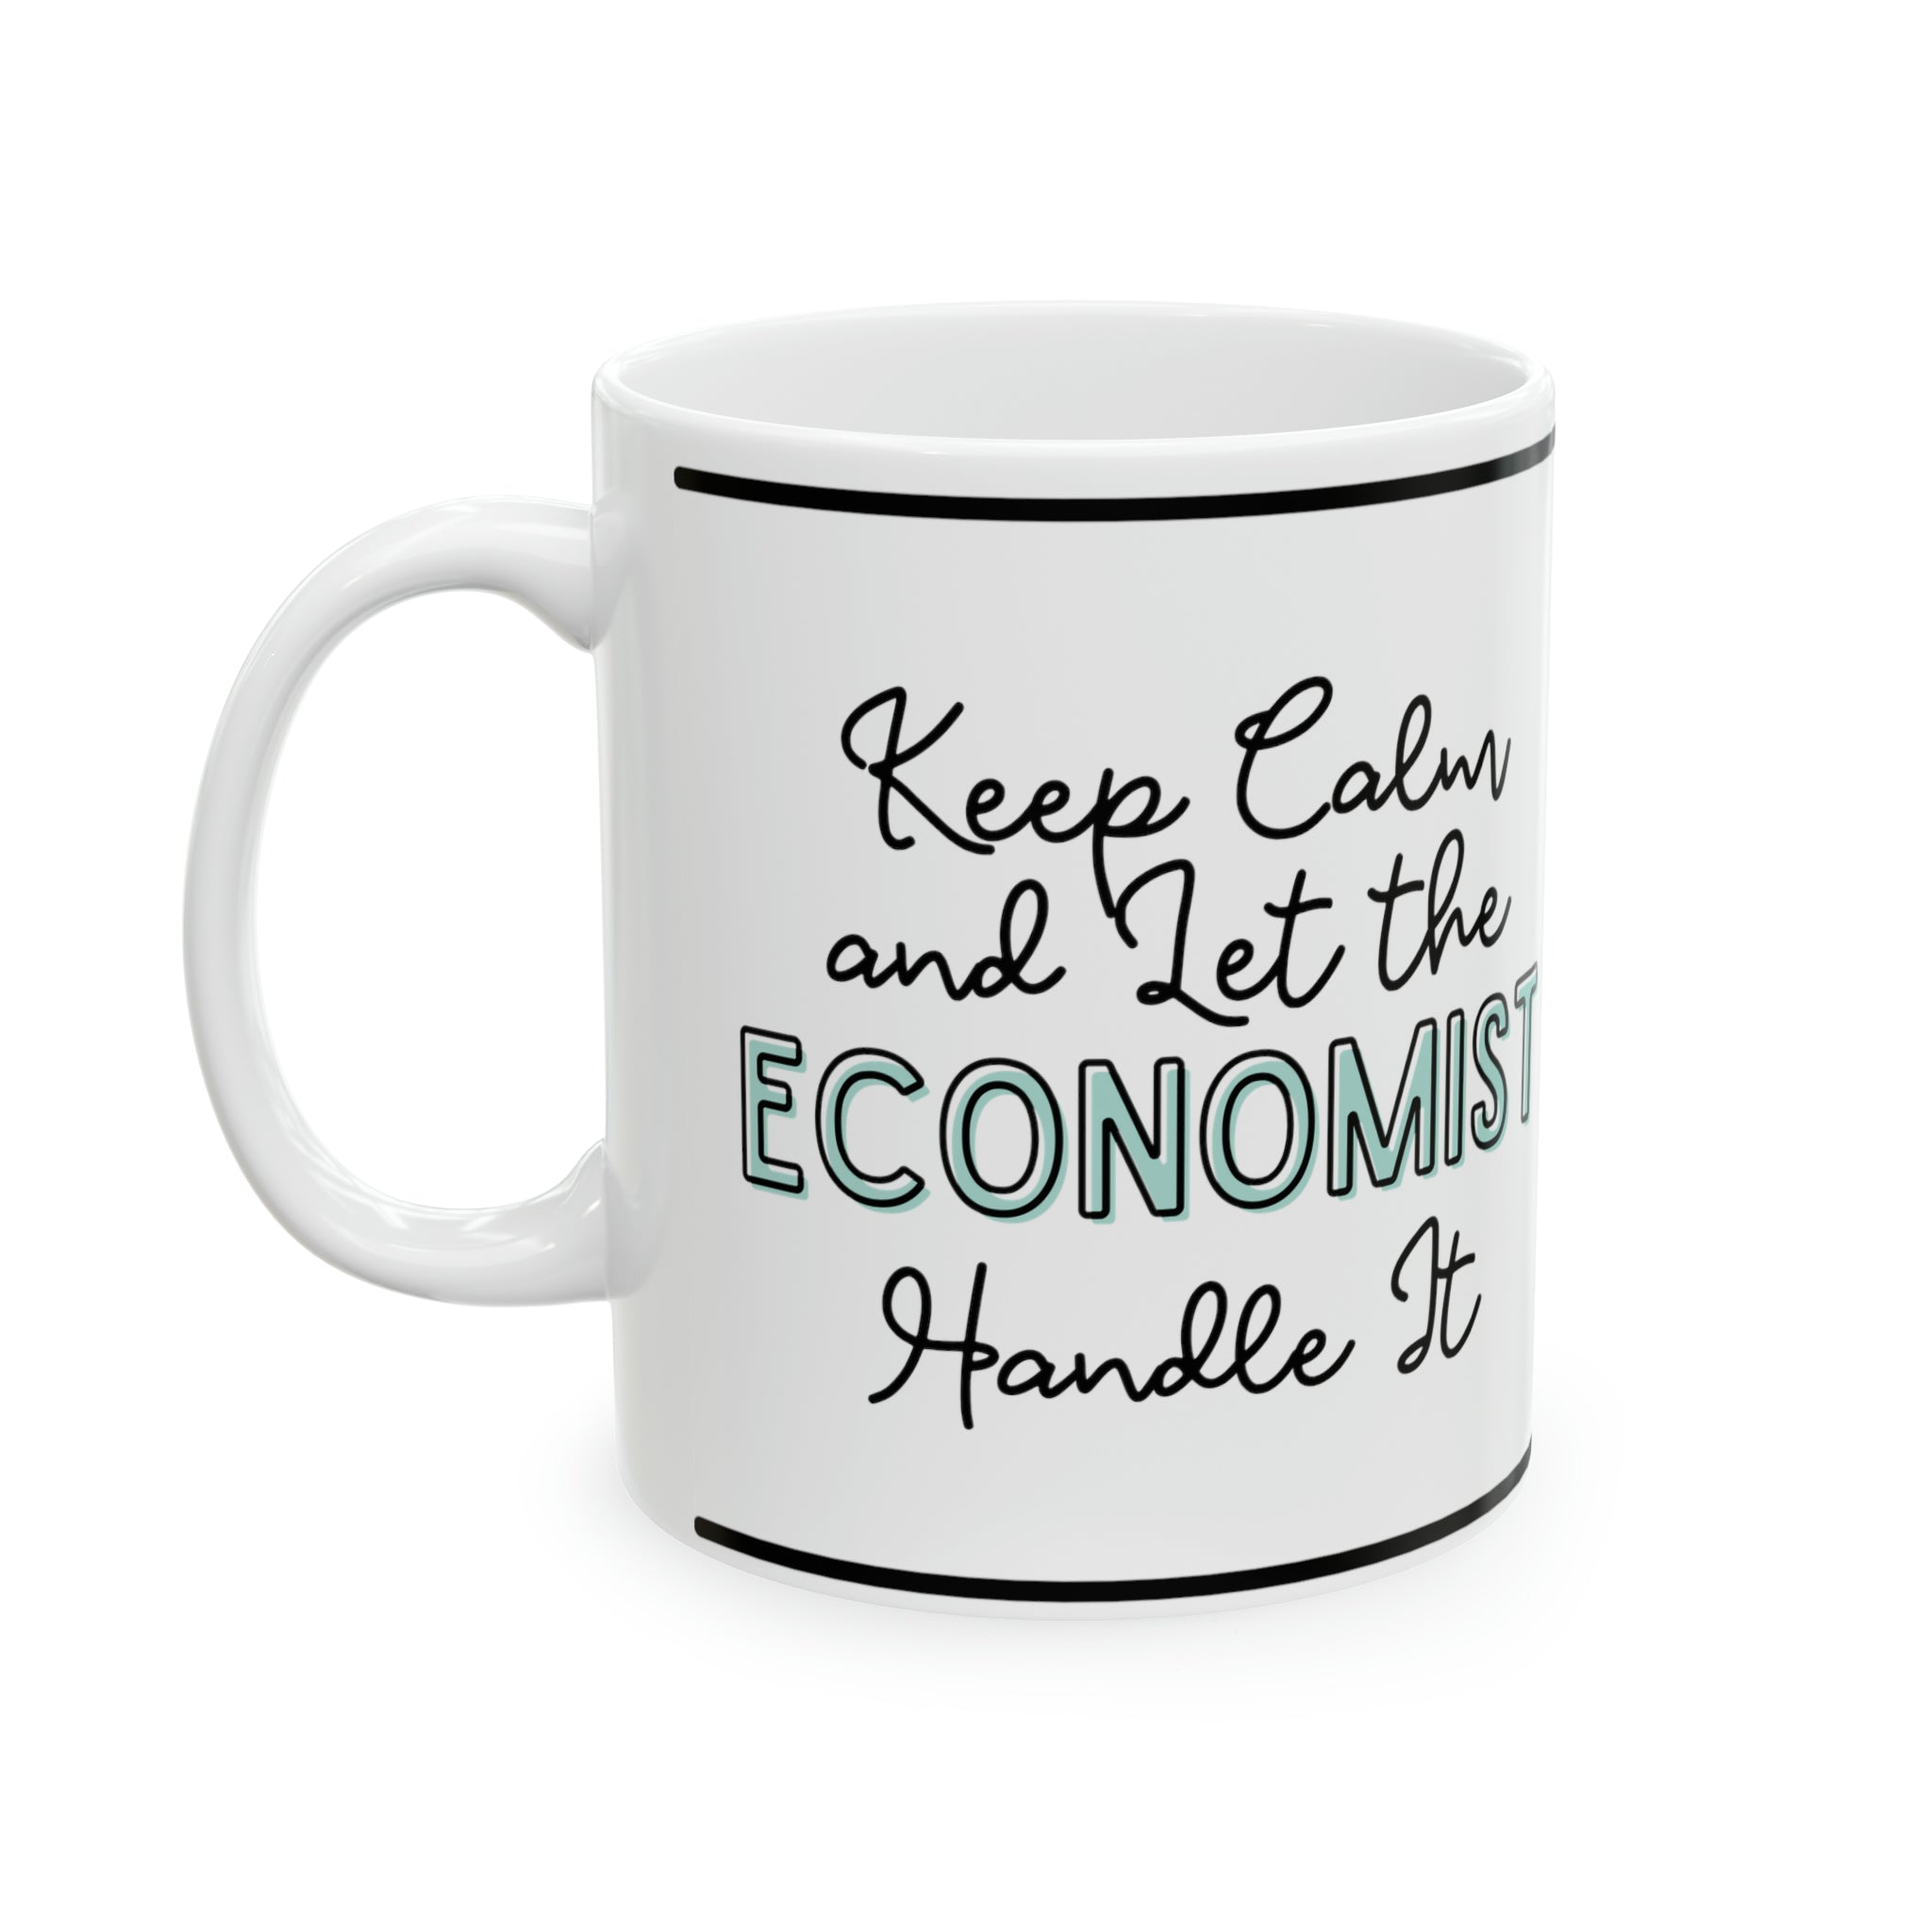 Keep Calm and let the Economist Handle It - Ceramic Mug, 11oz